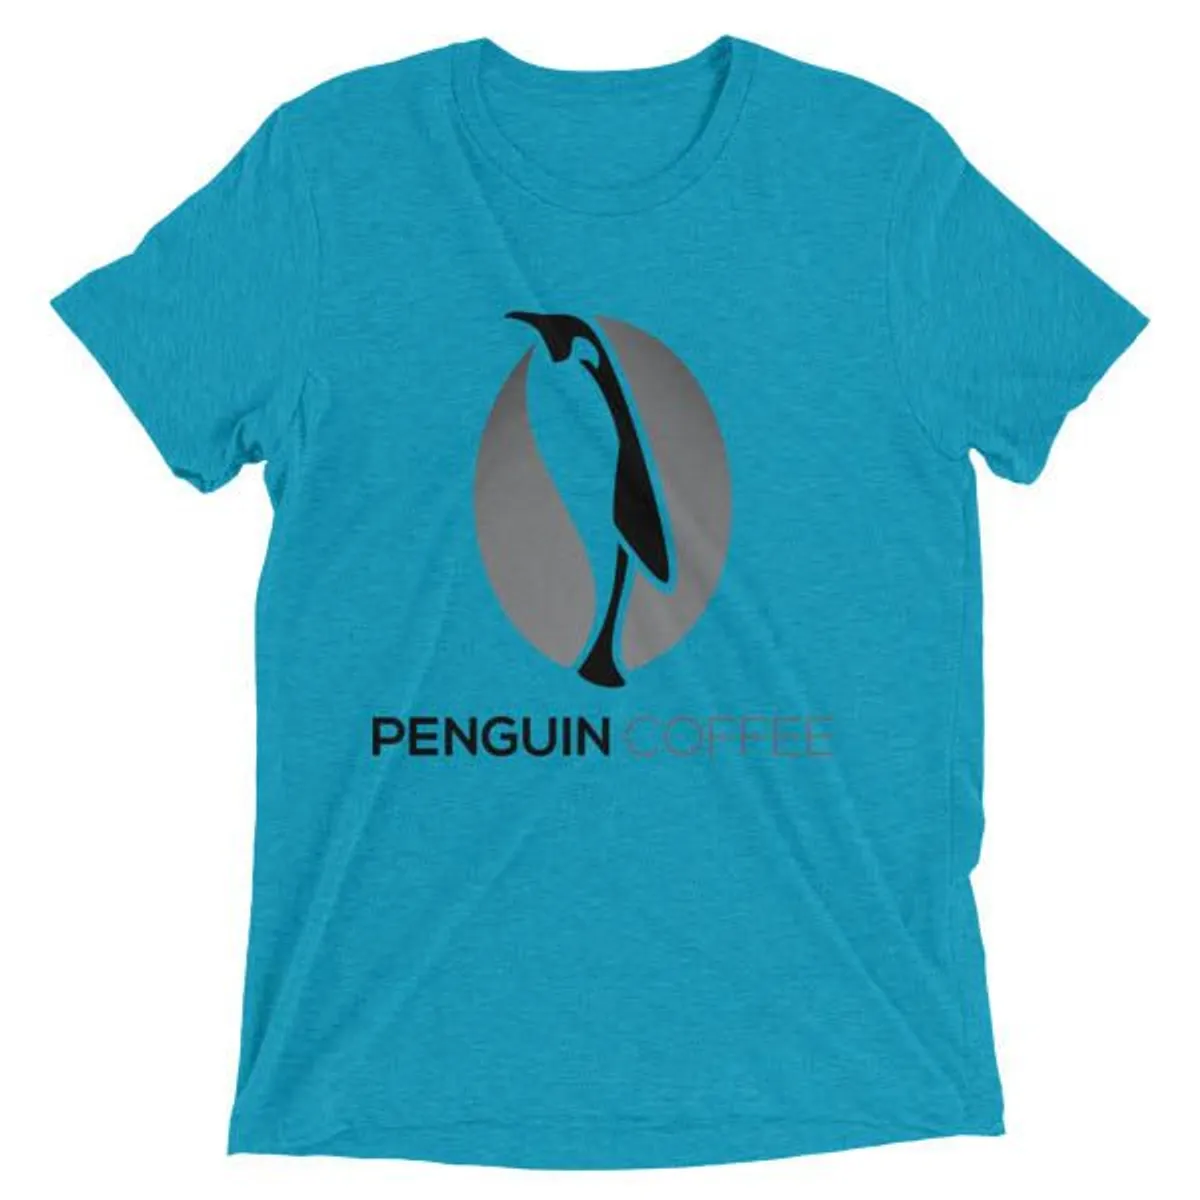 Penguin tshirt